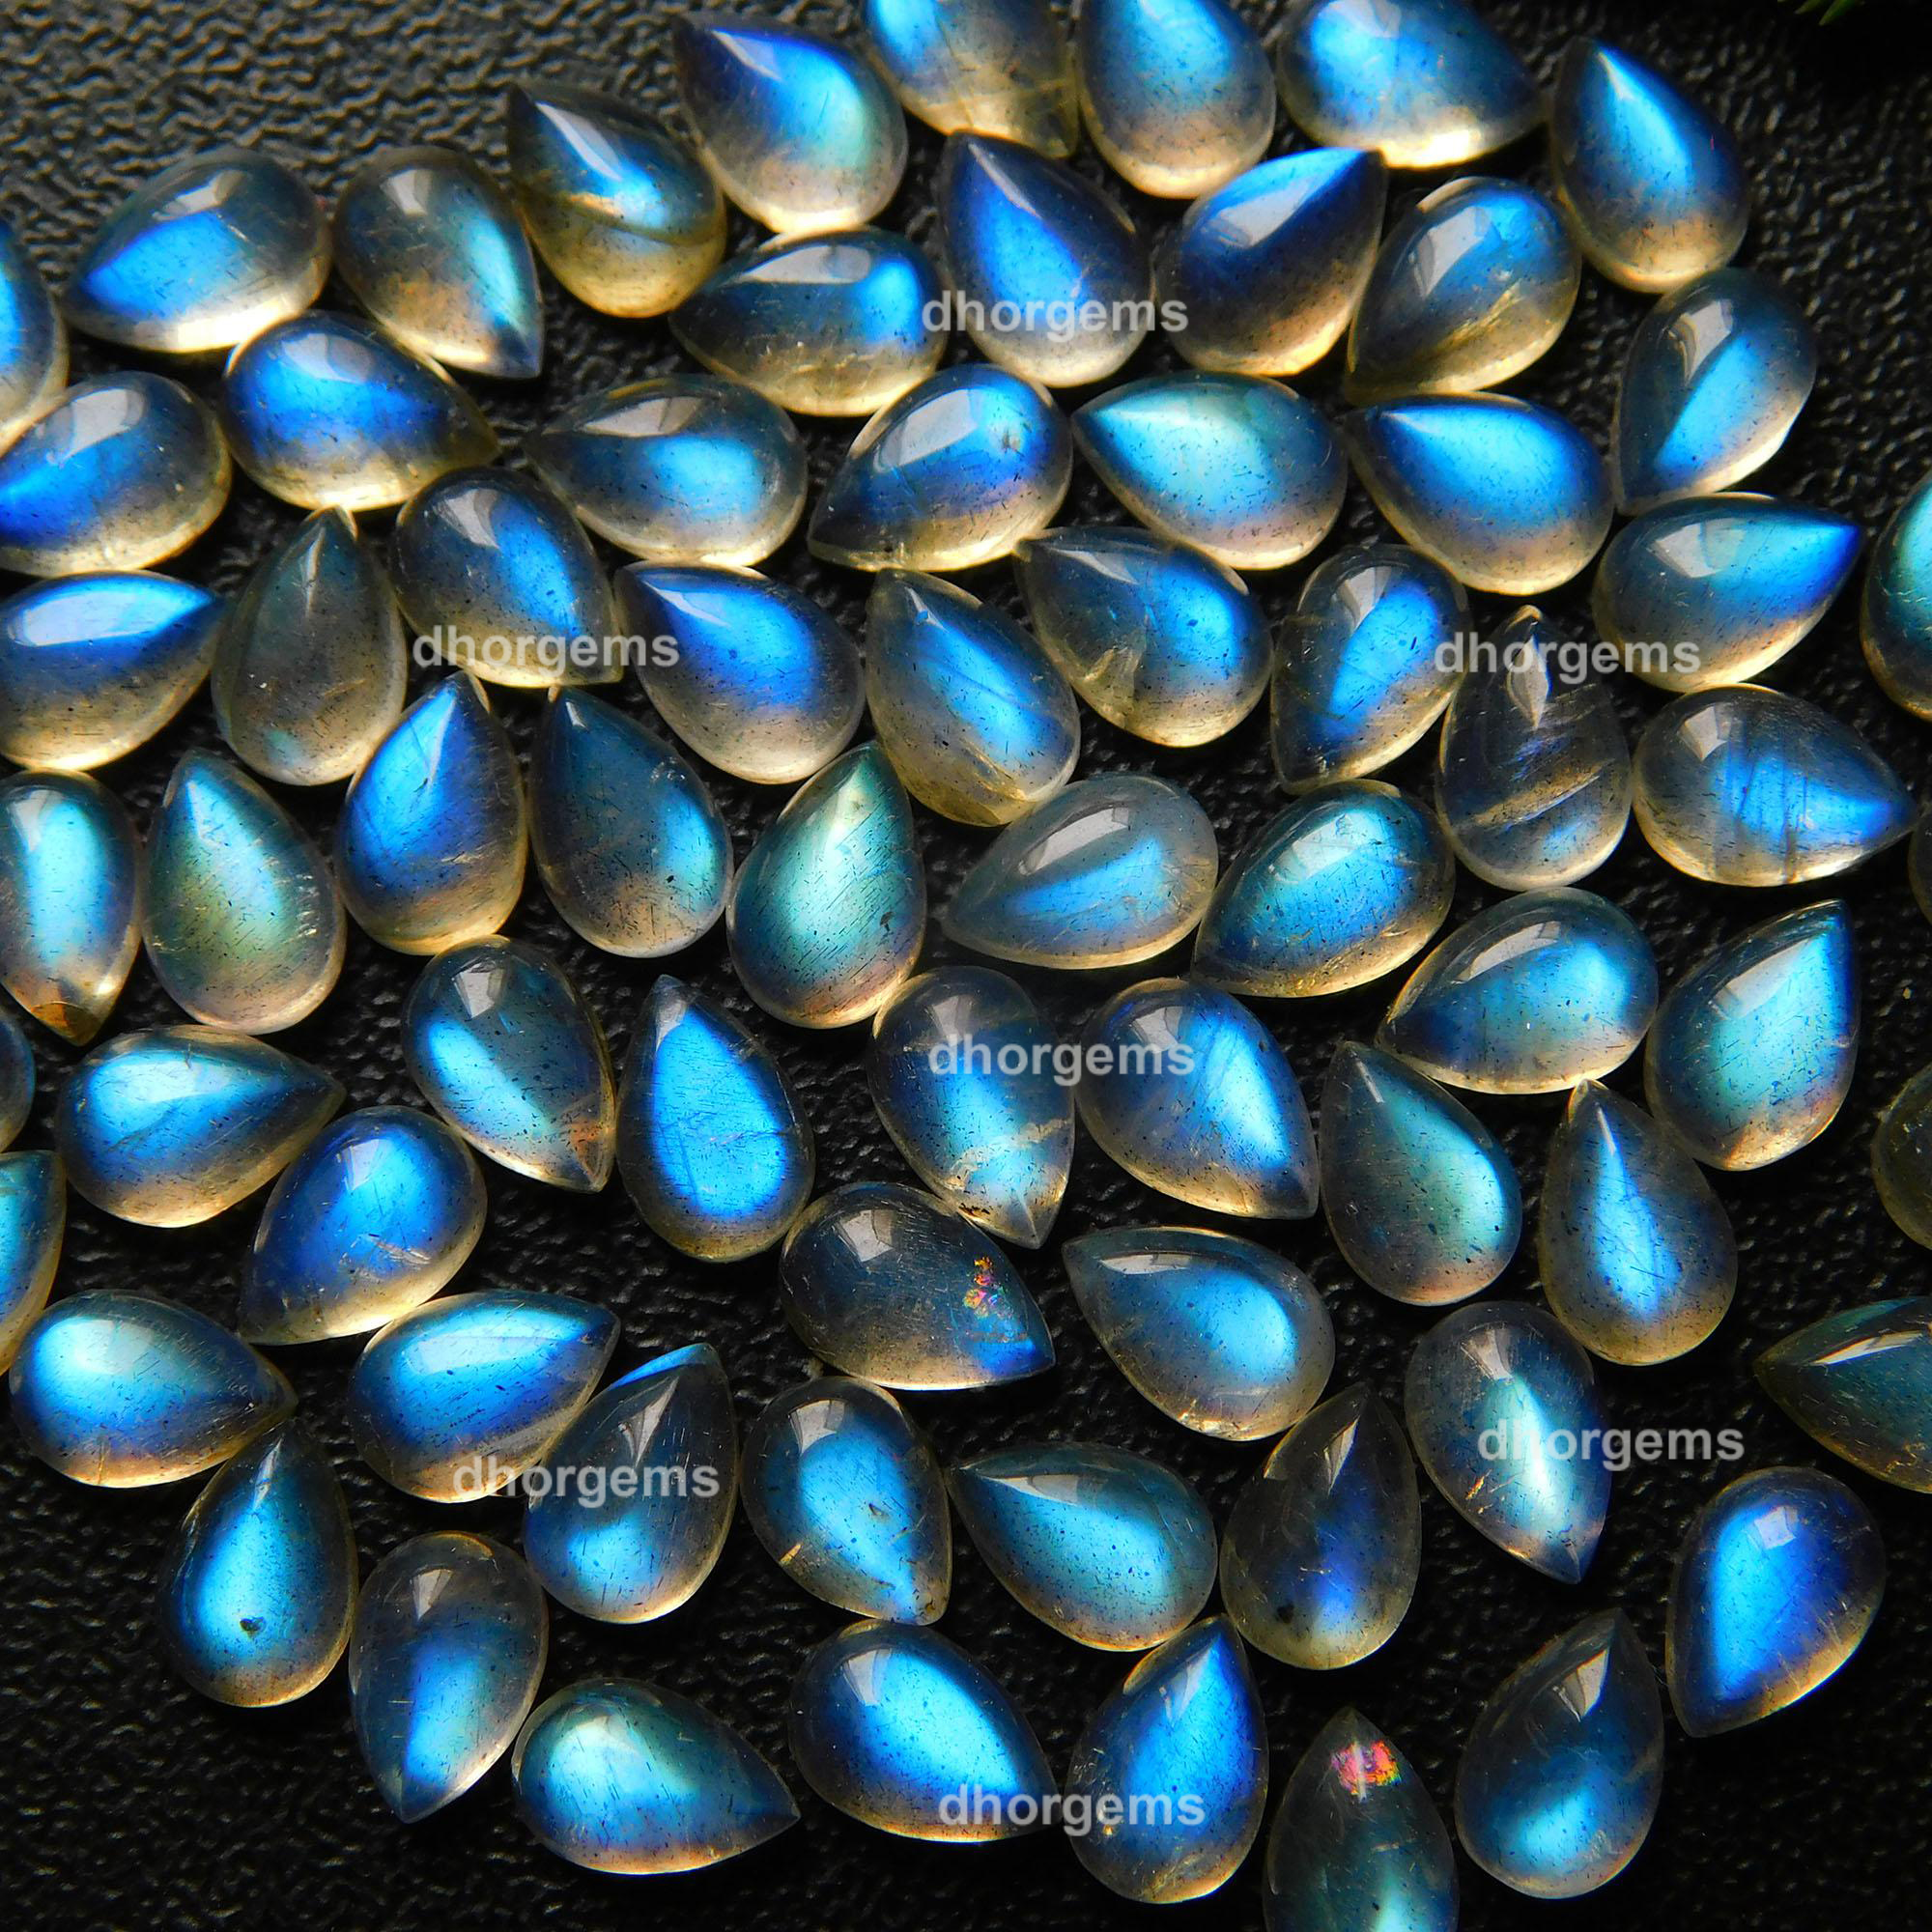 73Pcs 34.9Cts Natural Blue Fire Labradorite Loose Cabochon Calibrated Pear Shape Gemstone Lot 4x6mm#9250